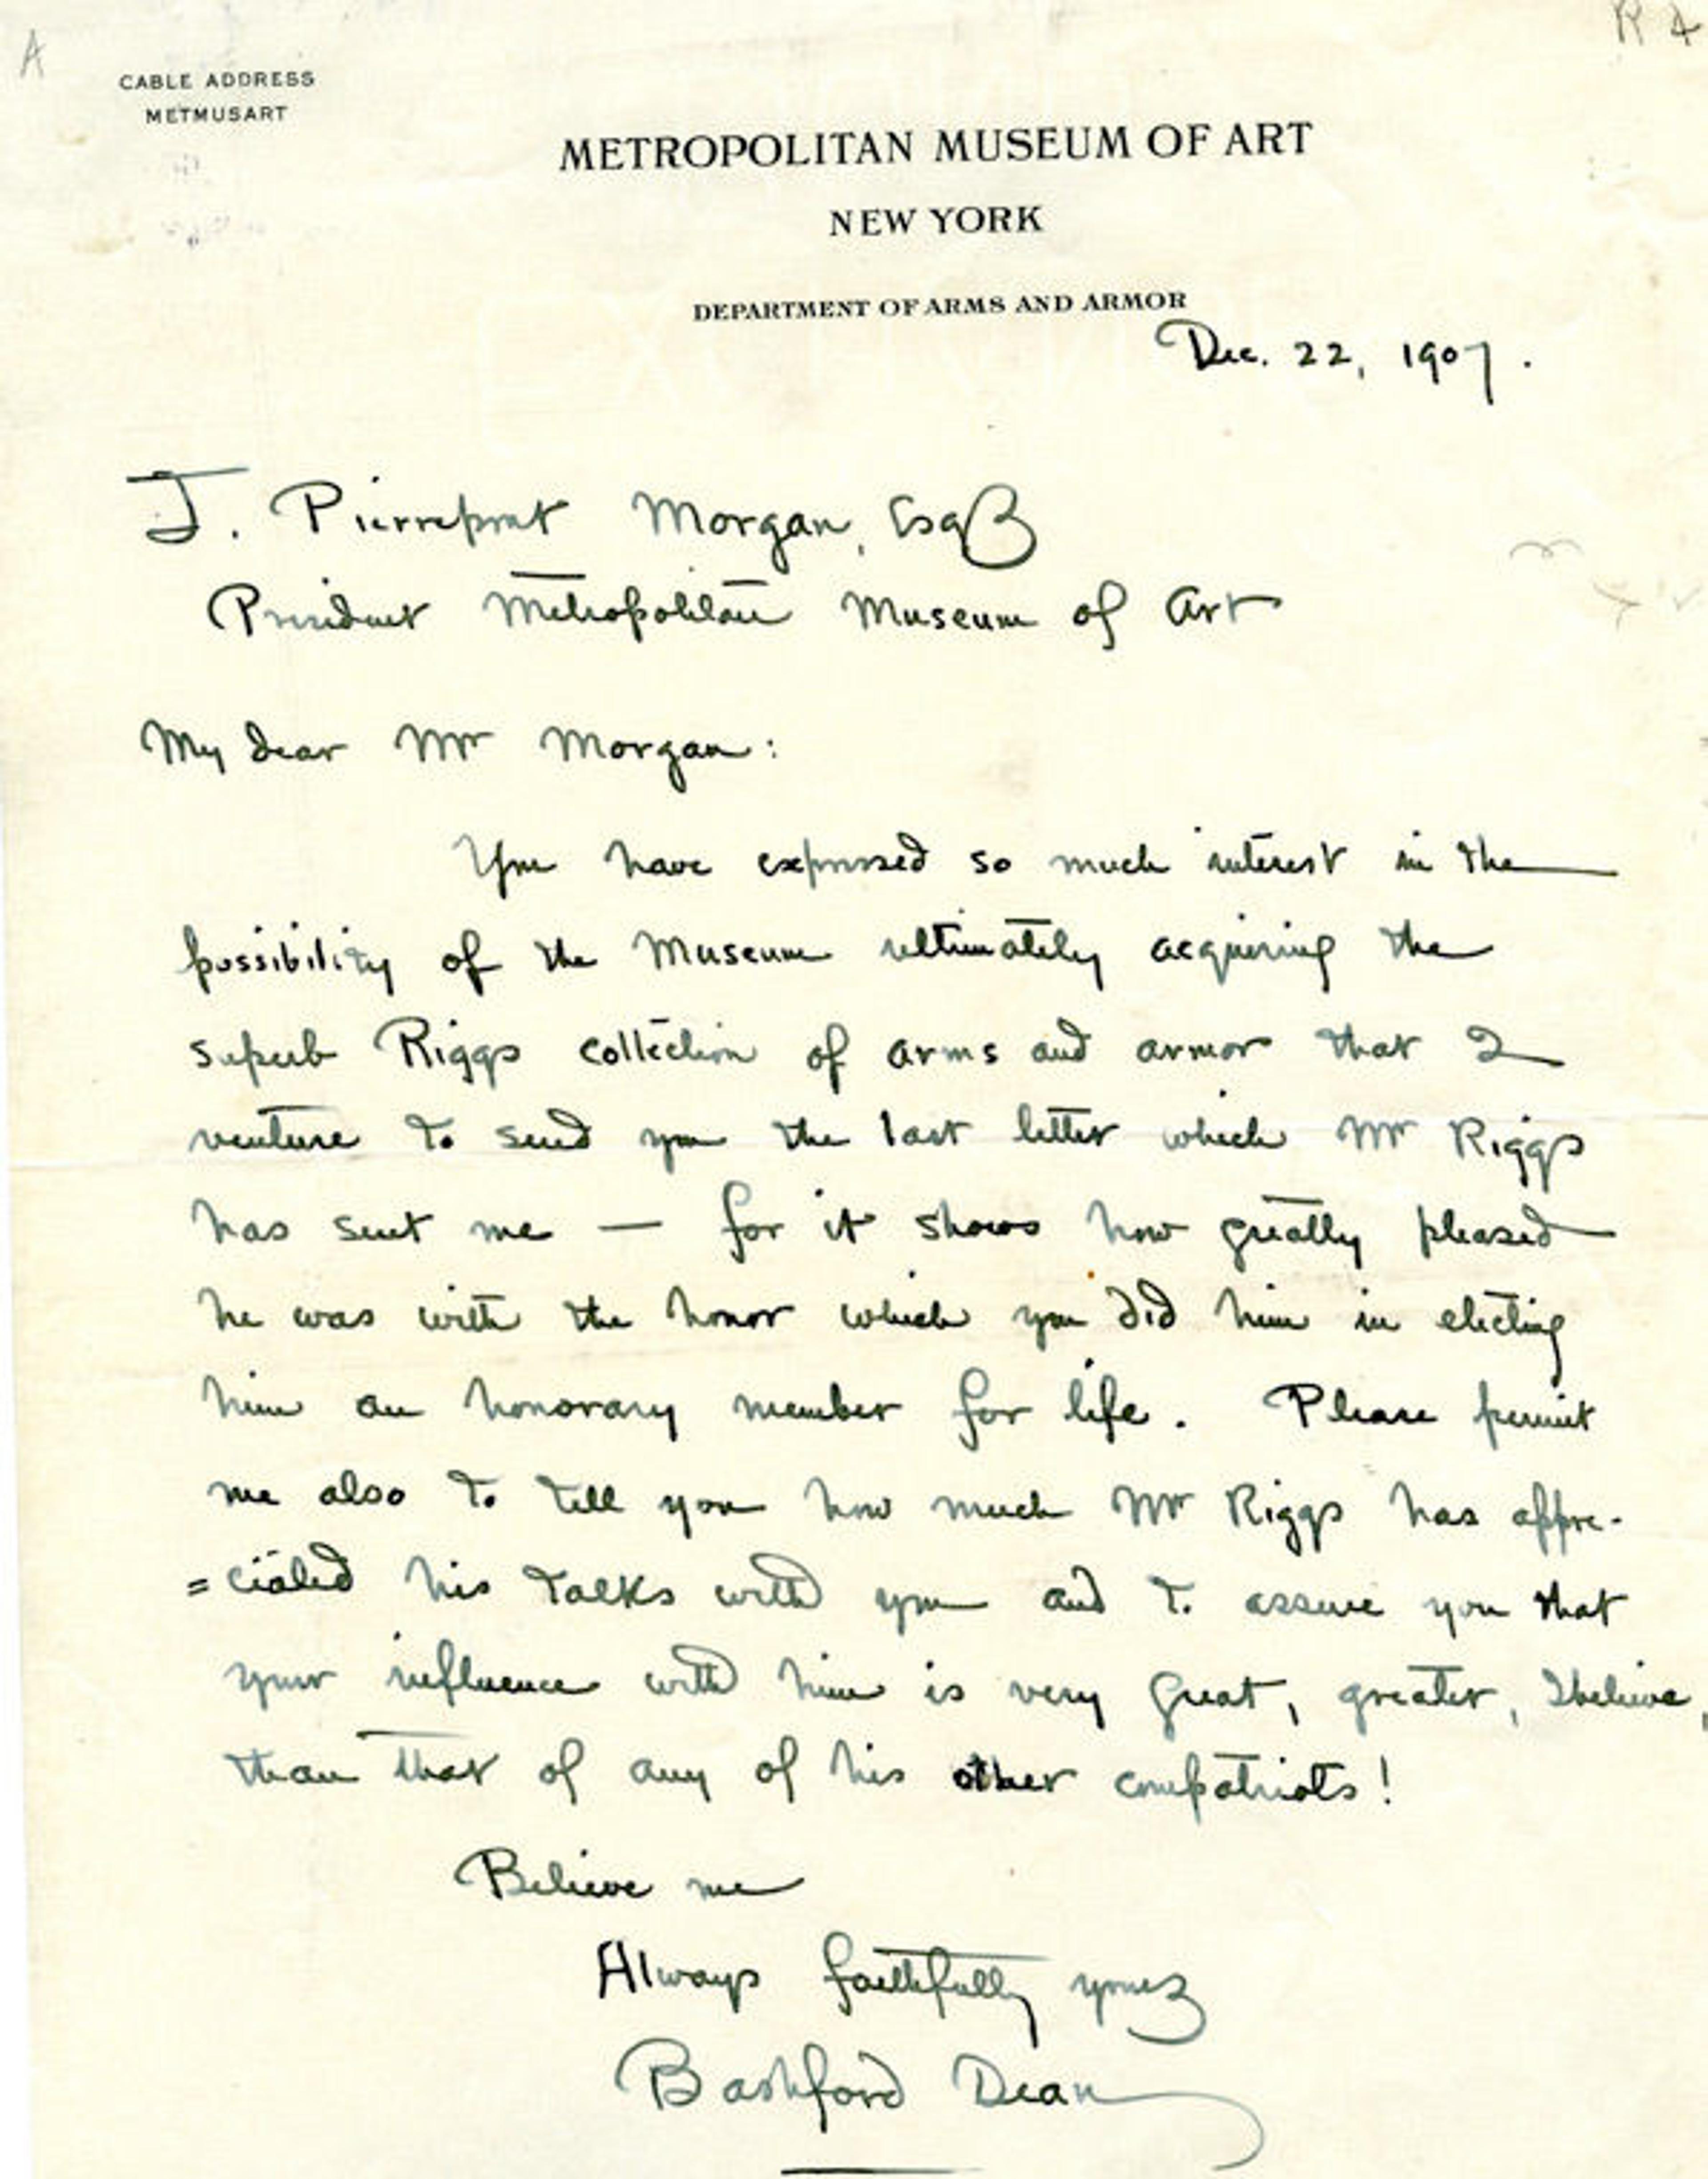 Letter from Bashford Dean to Museum President J. P. Morgan